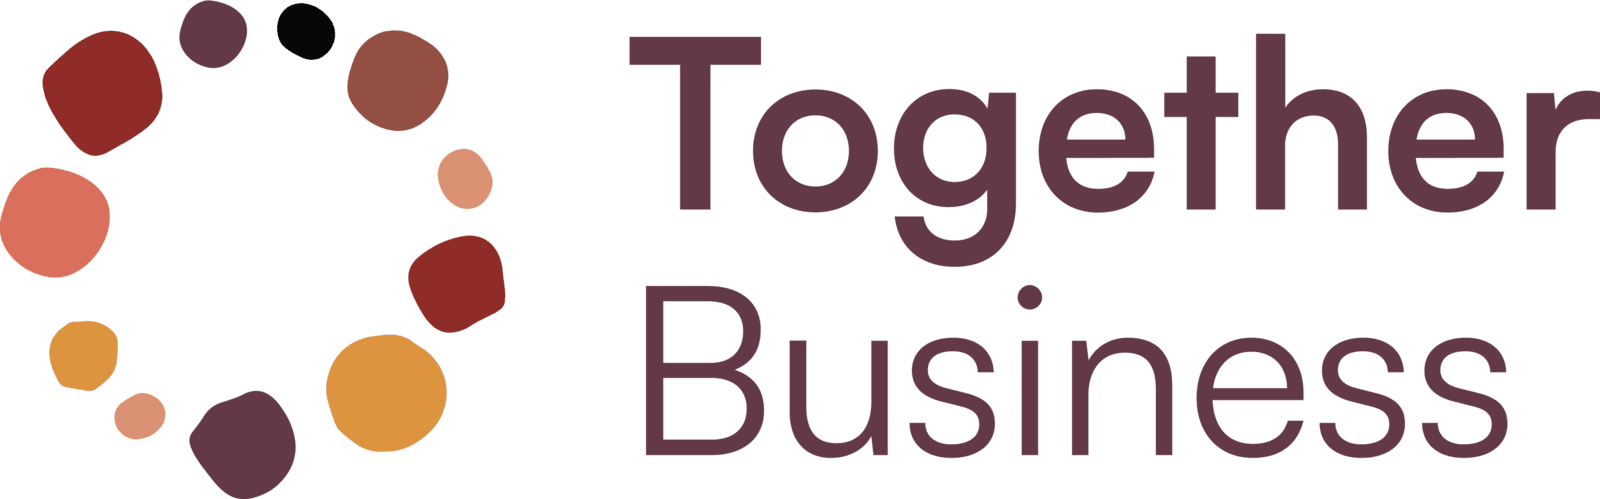 Together Business